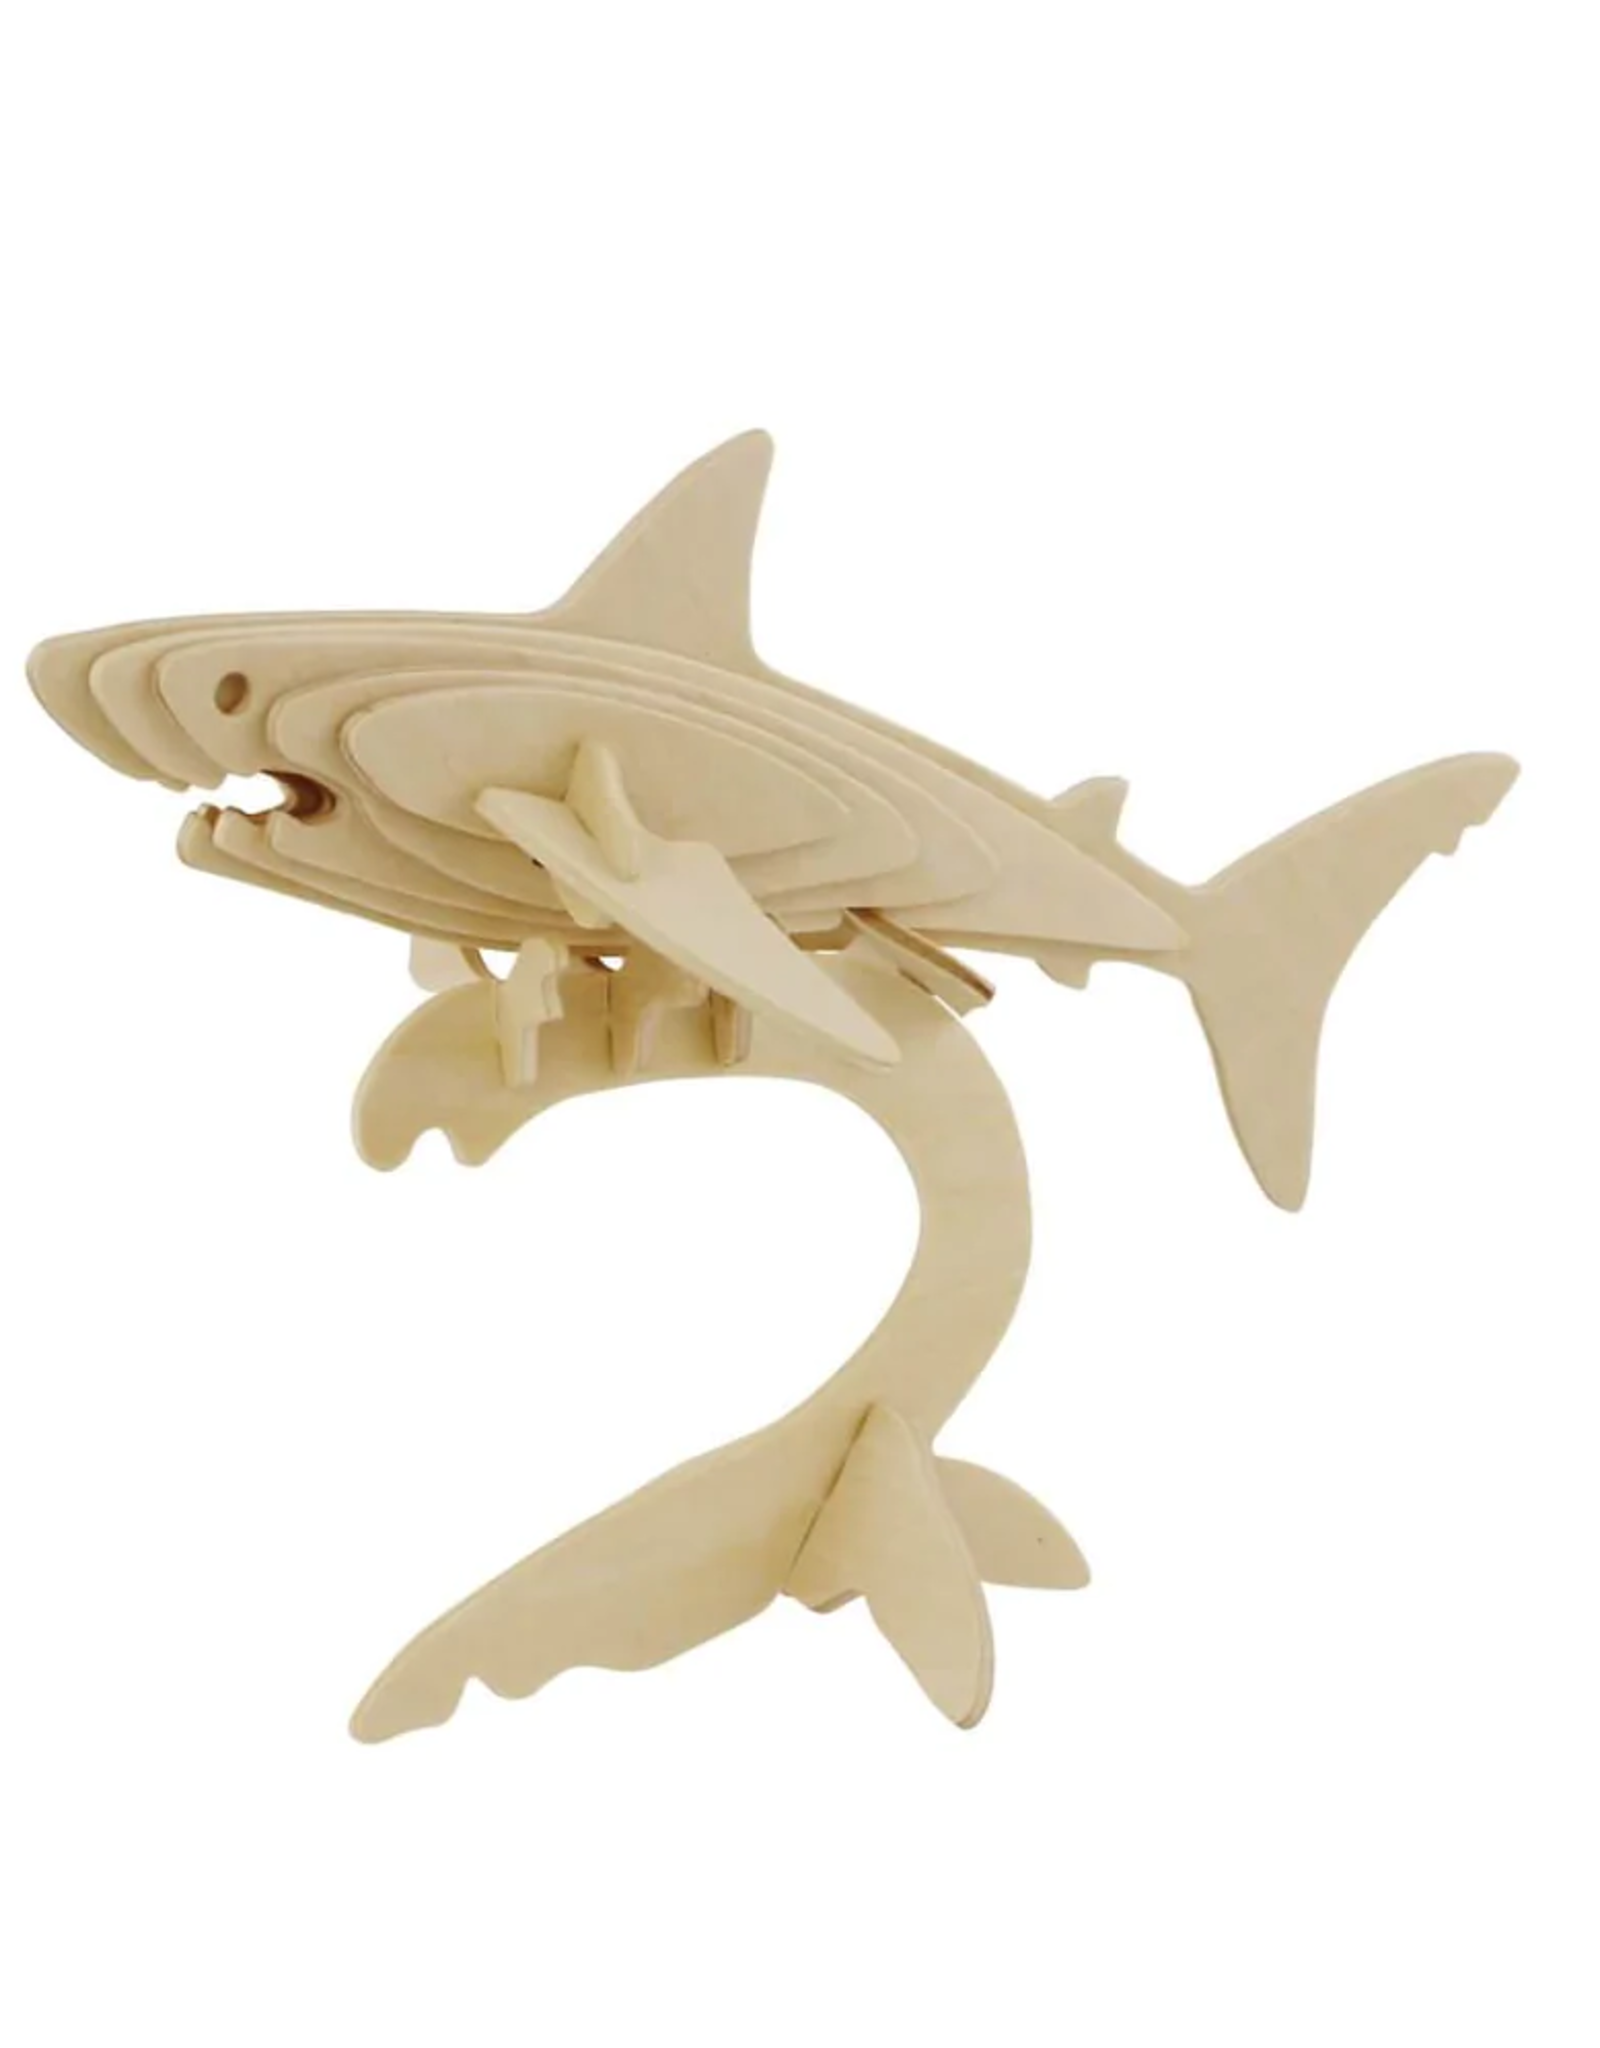 Handscraft Hand's Craft - Wooden Puzzle, Shark